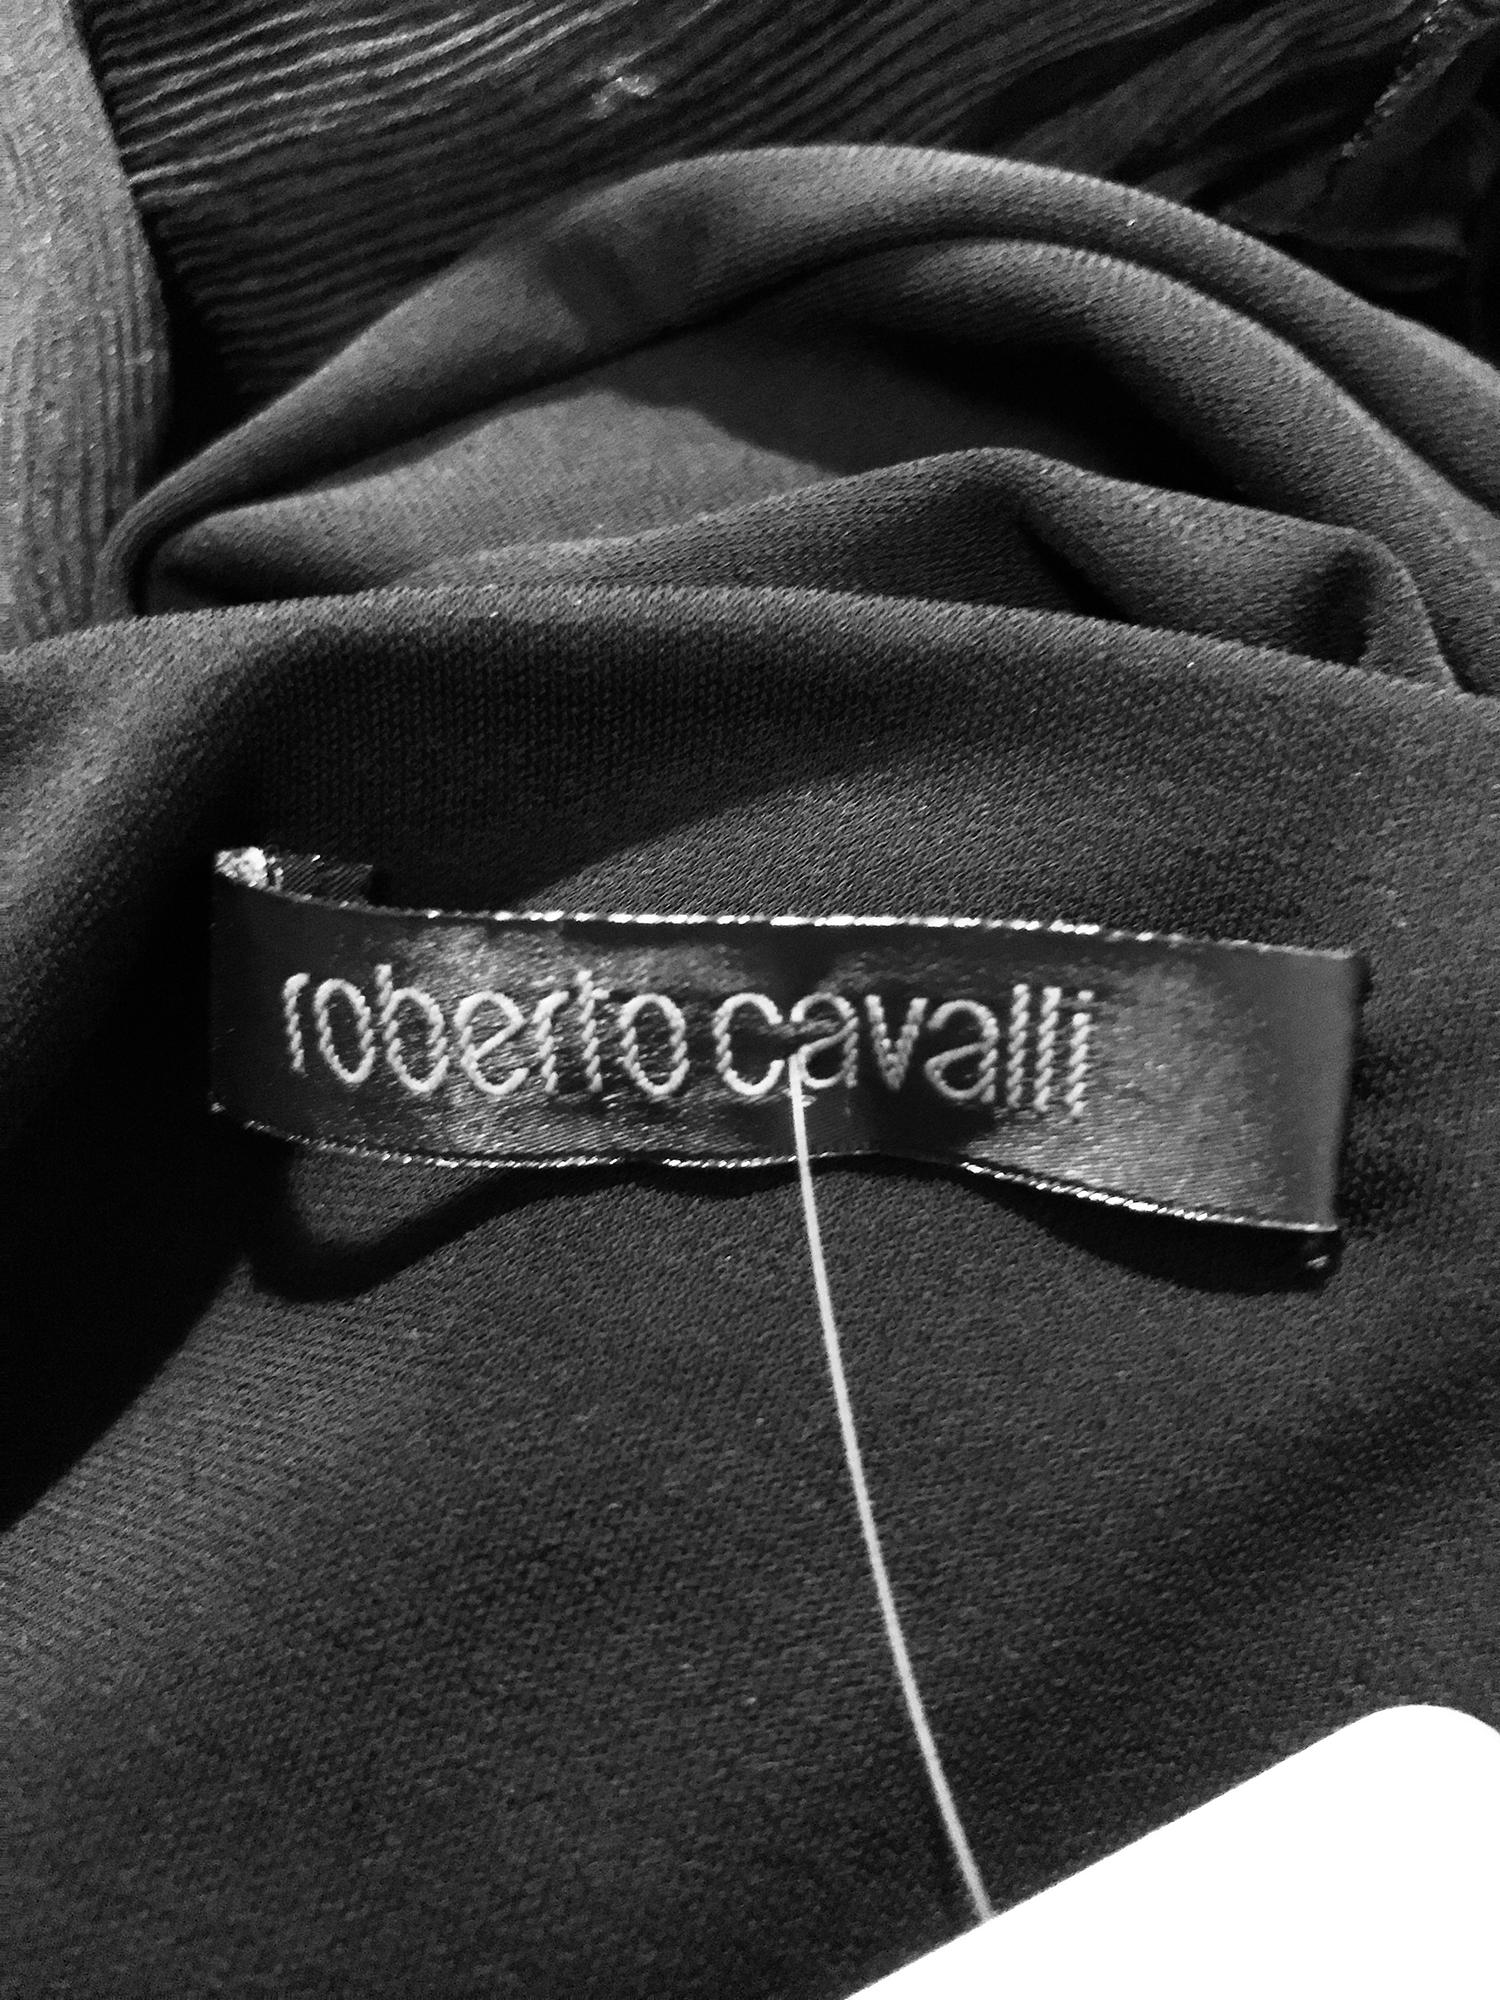 Roberto Cavalli Black Jersey Dress with Black Chiffon Sleeves 6